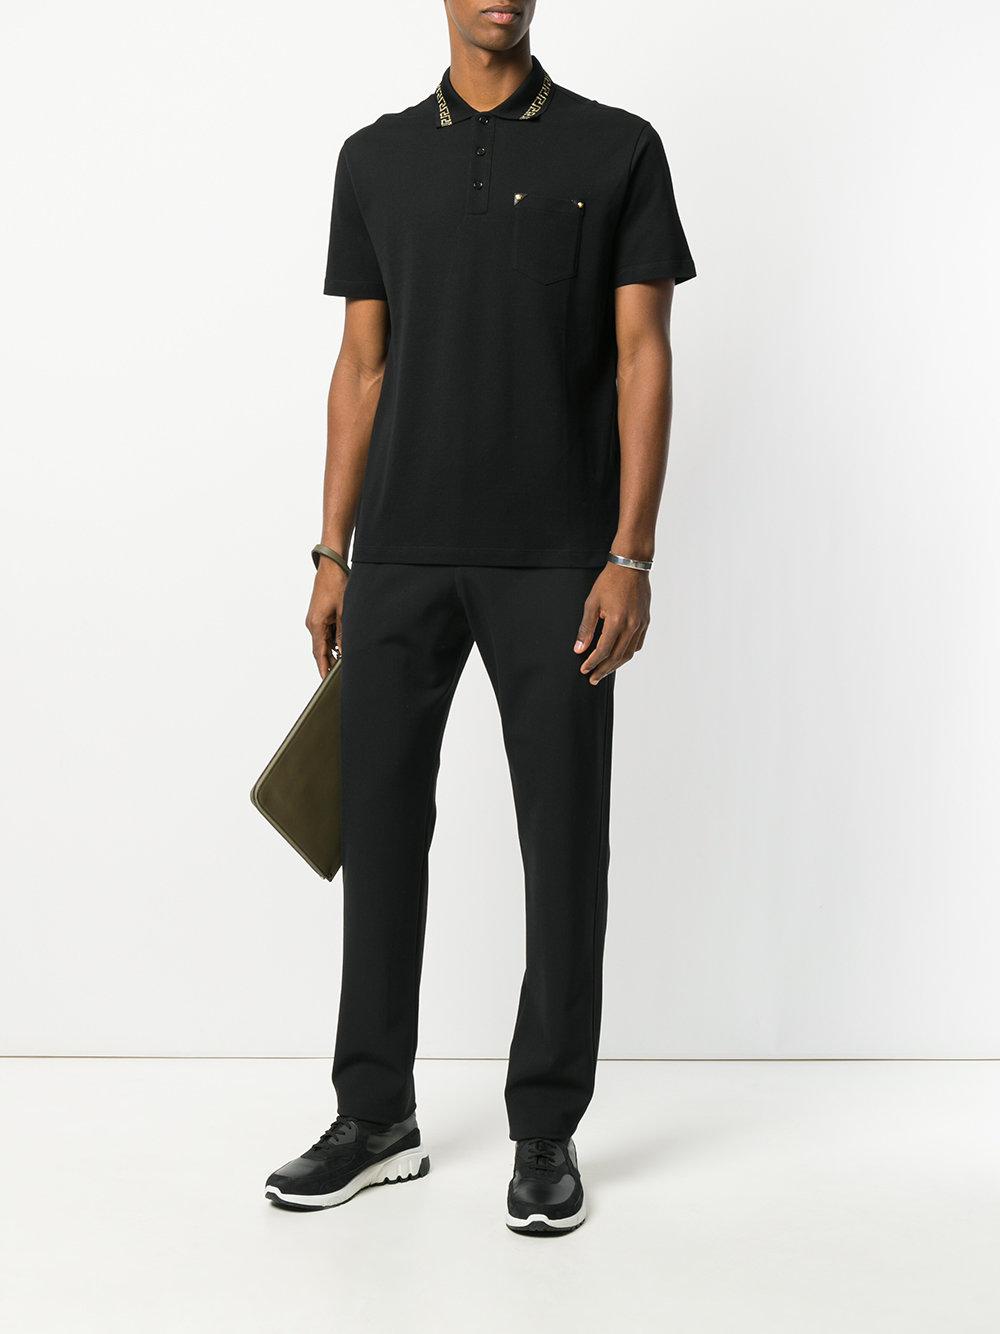 Lyst - Versace Greek Key Collar Polo Shirt in Black for Men